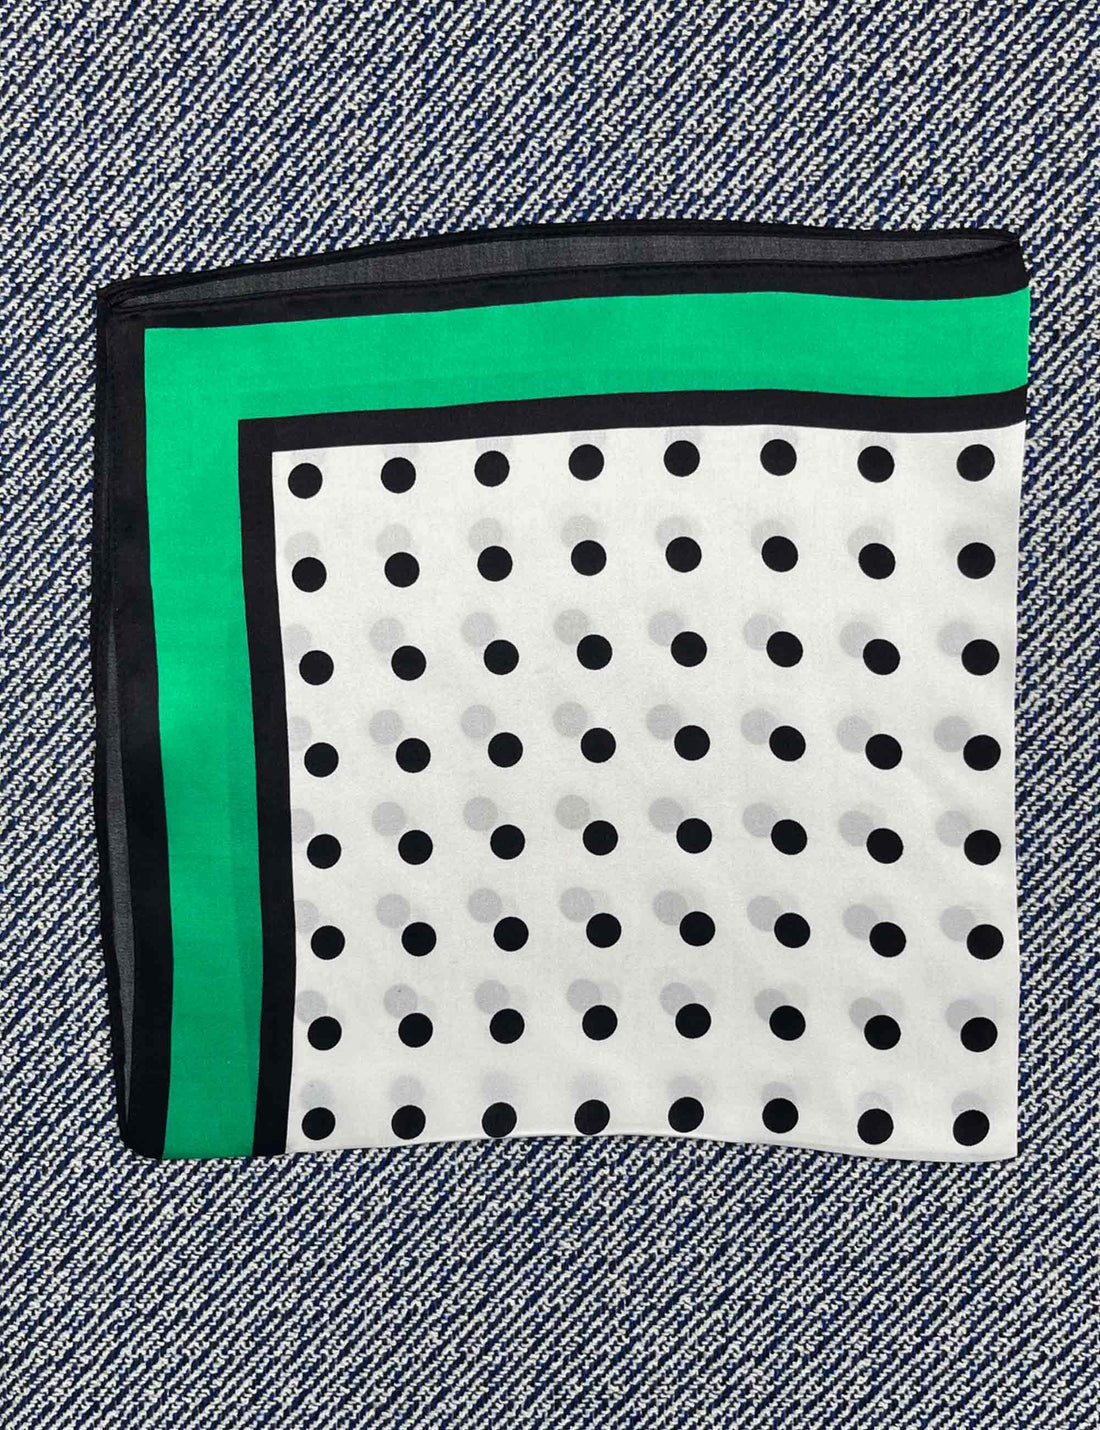 Silk scarf white/green/black dots